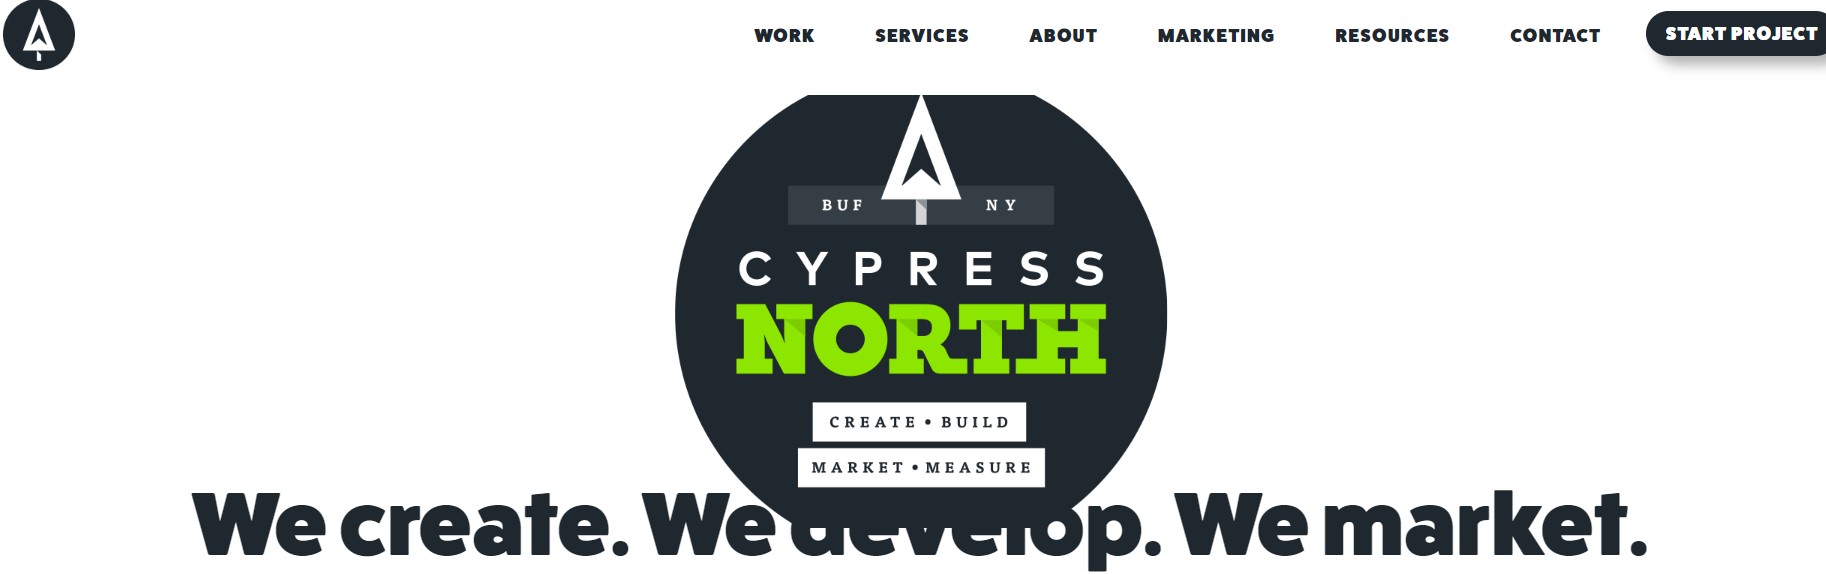 Cypress North